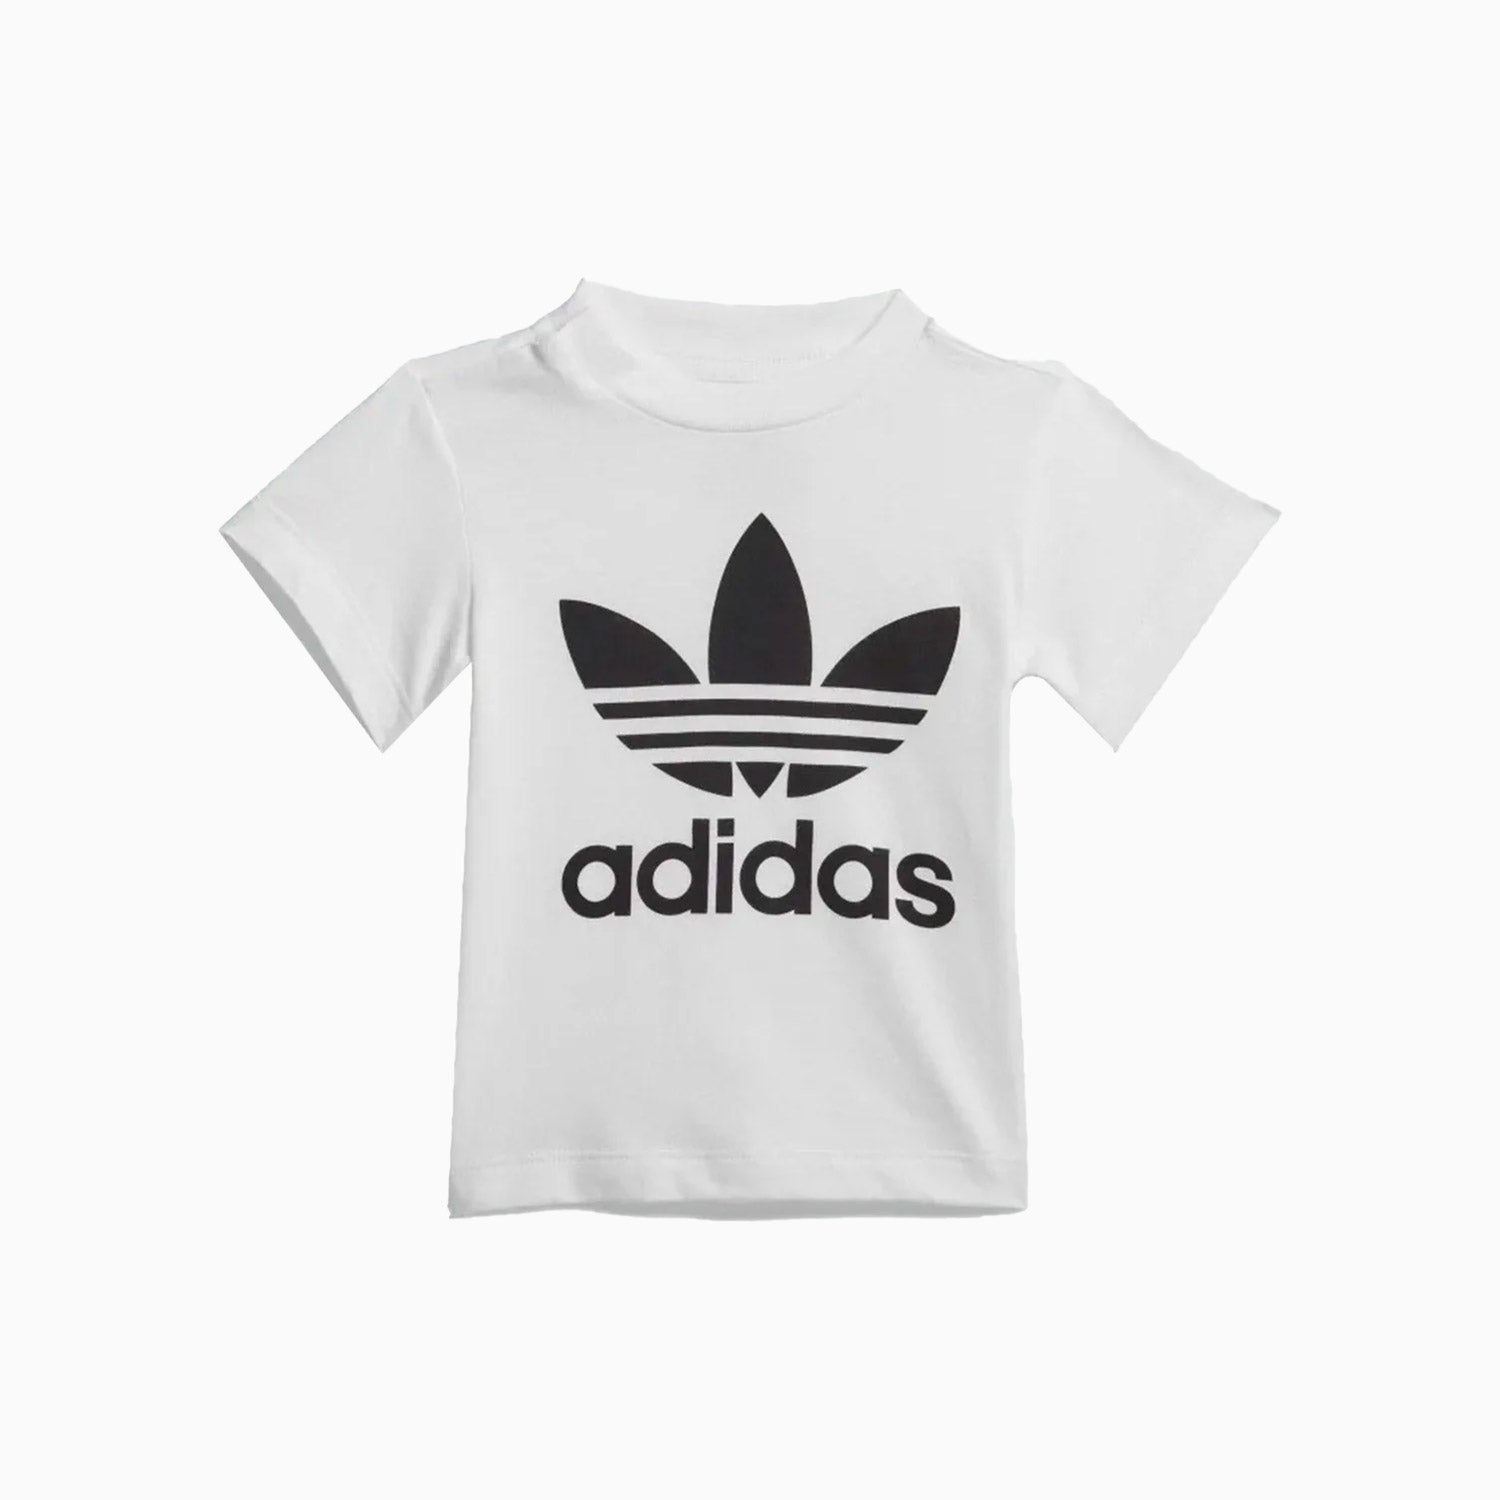 adidas-kids-originals-trefoil-short-outfit-toddlers-fi8318